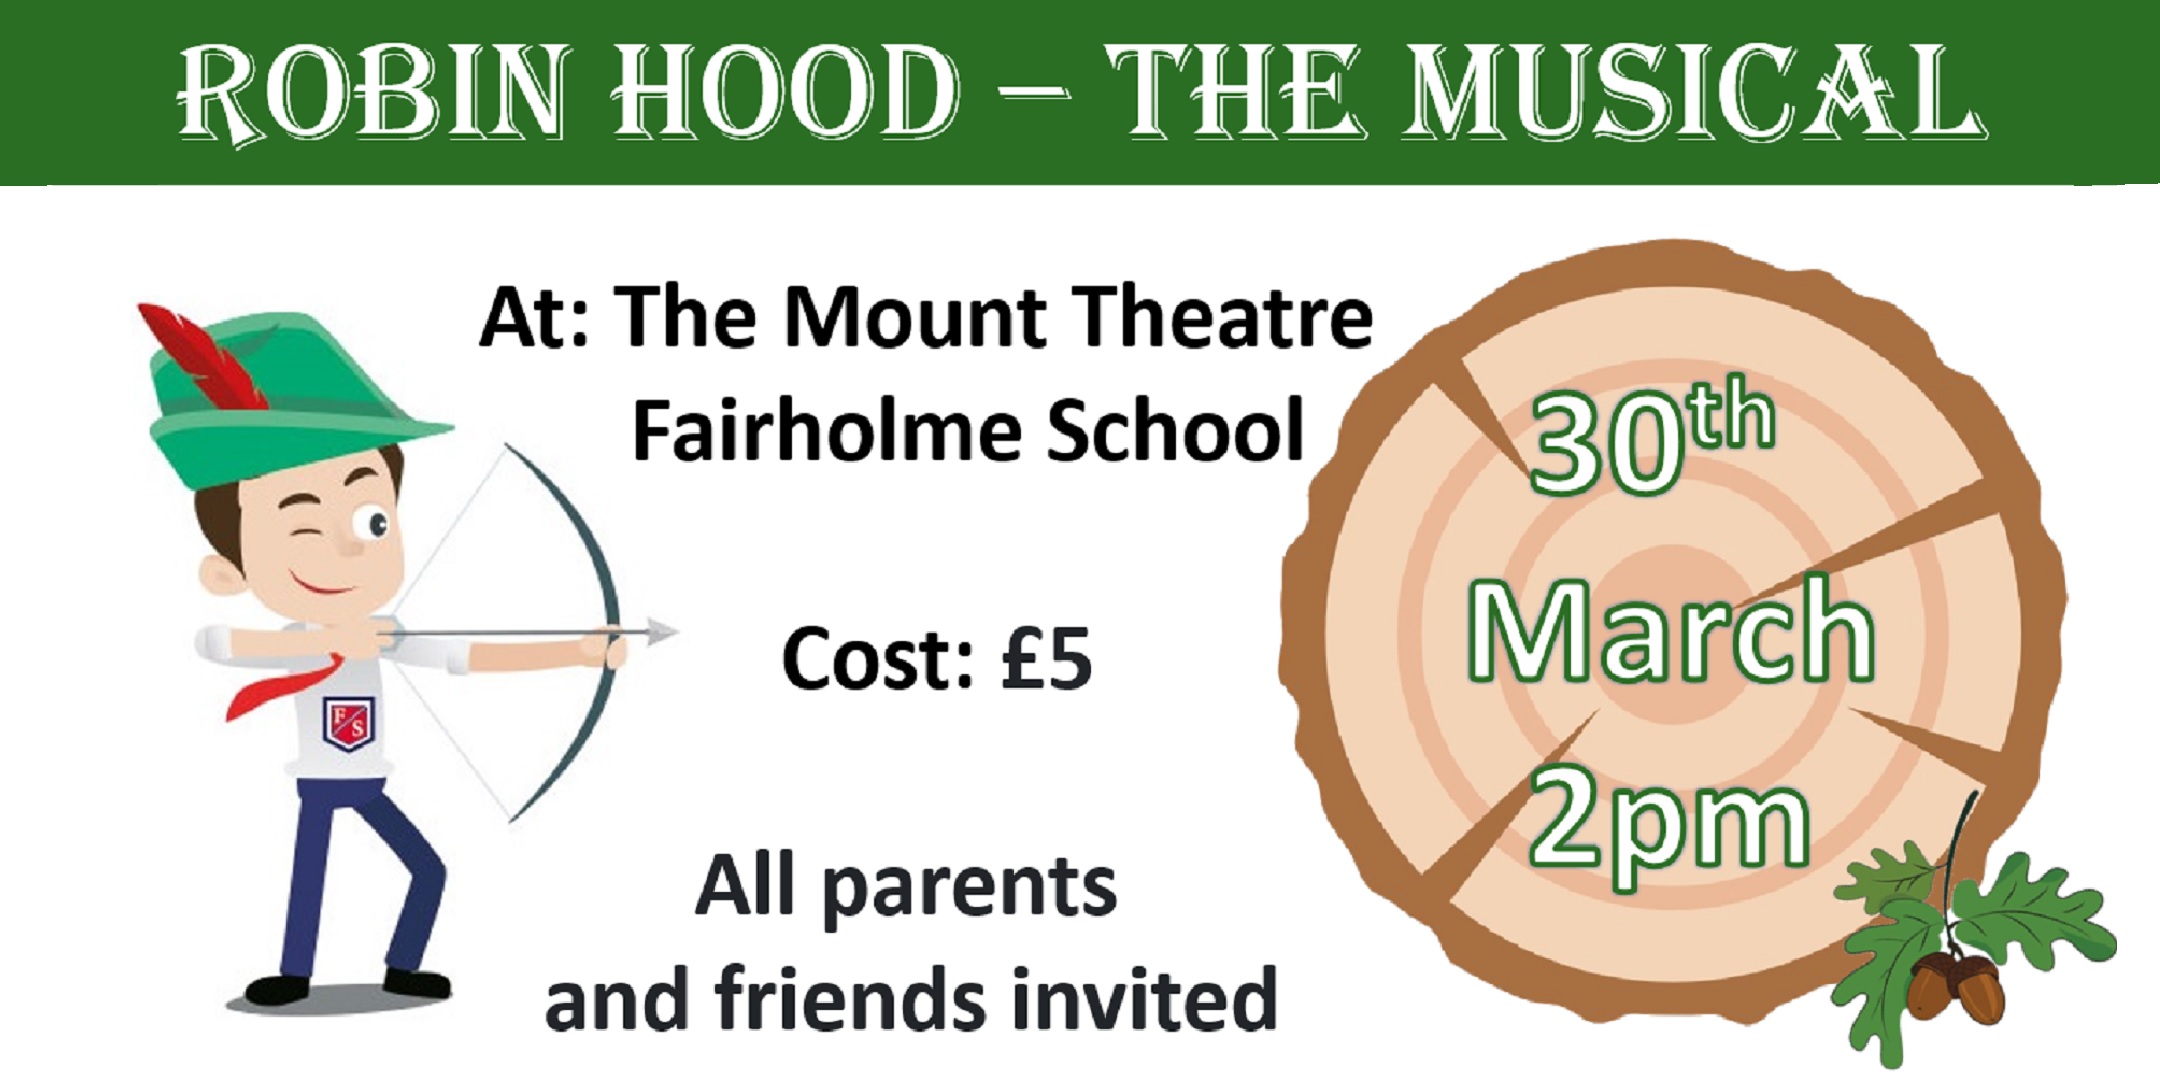 Robin Hood - the Musical